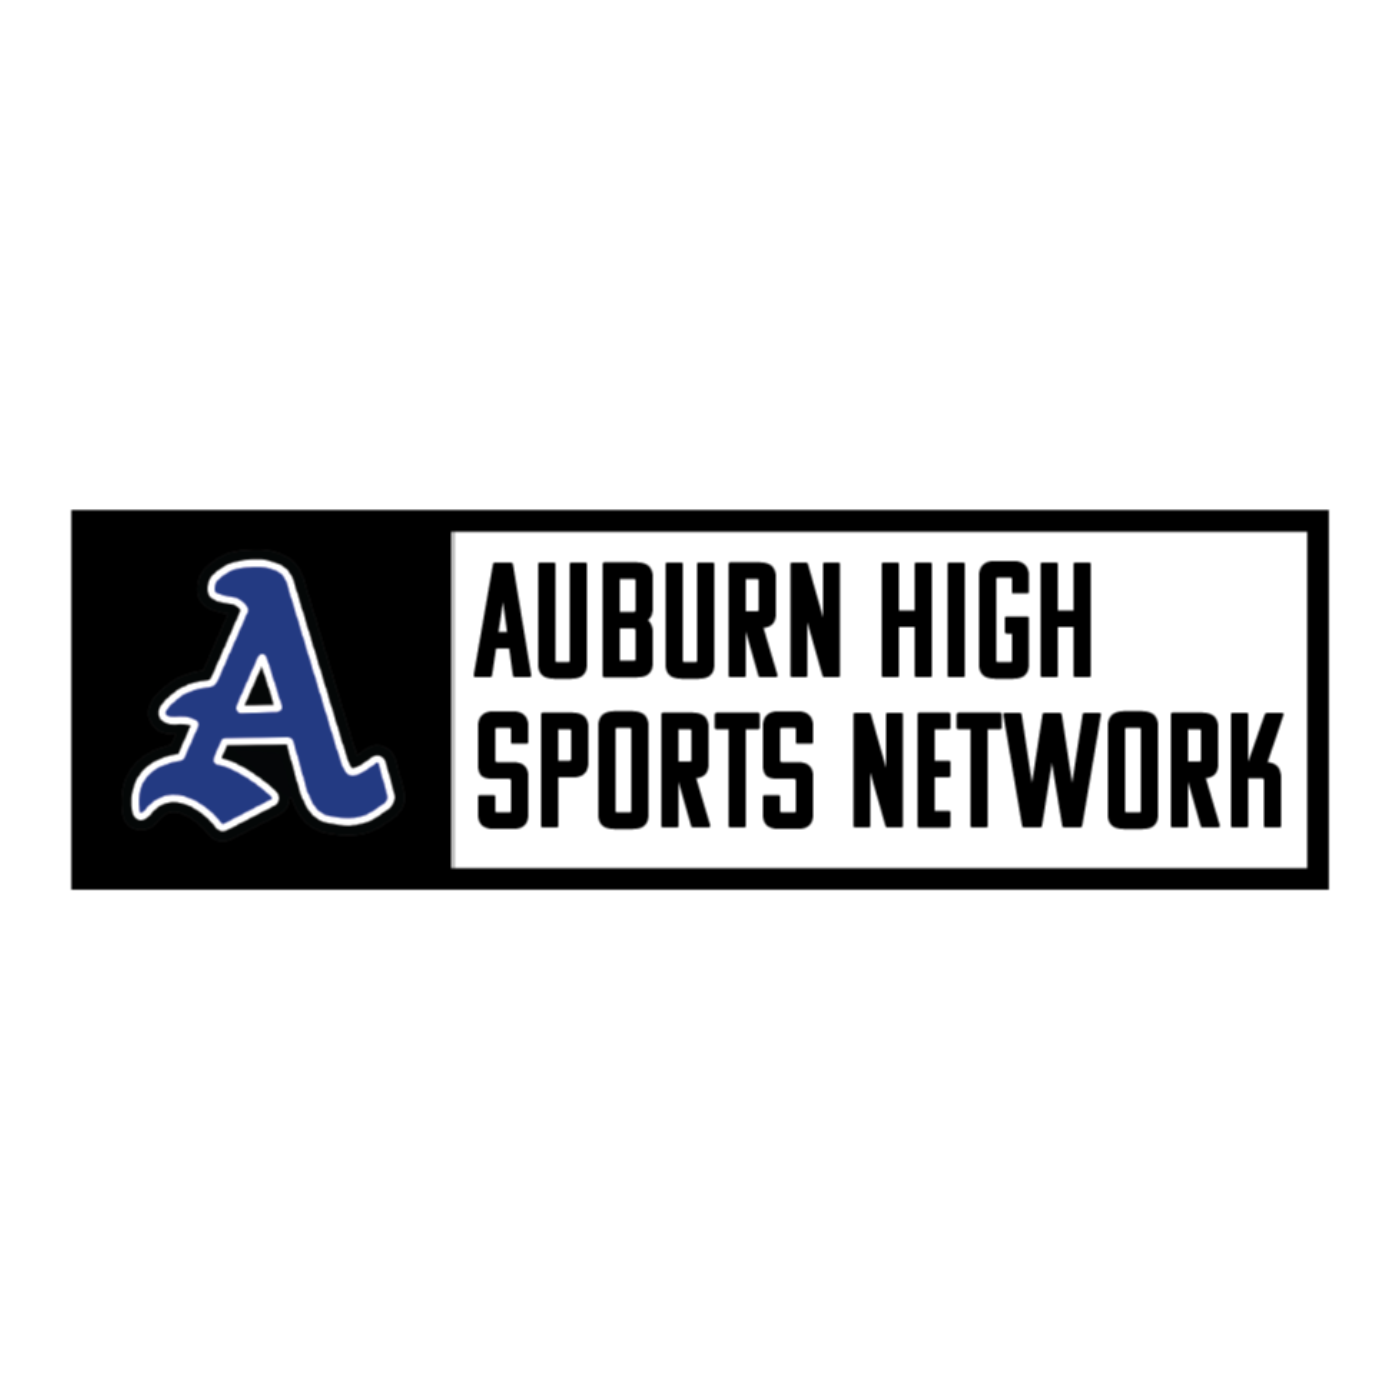 (Football) Auburn High vs. Central Week 9 October 14, 2022